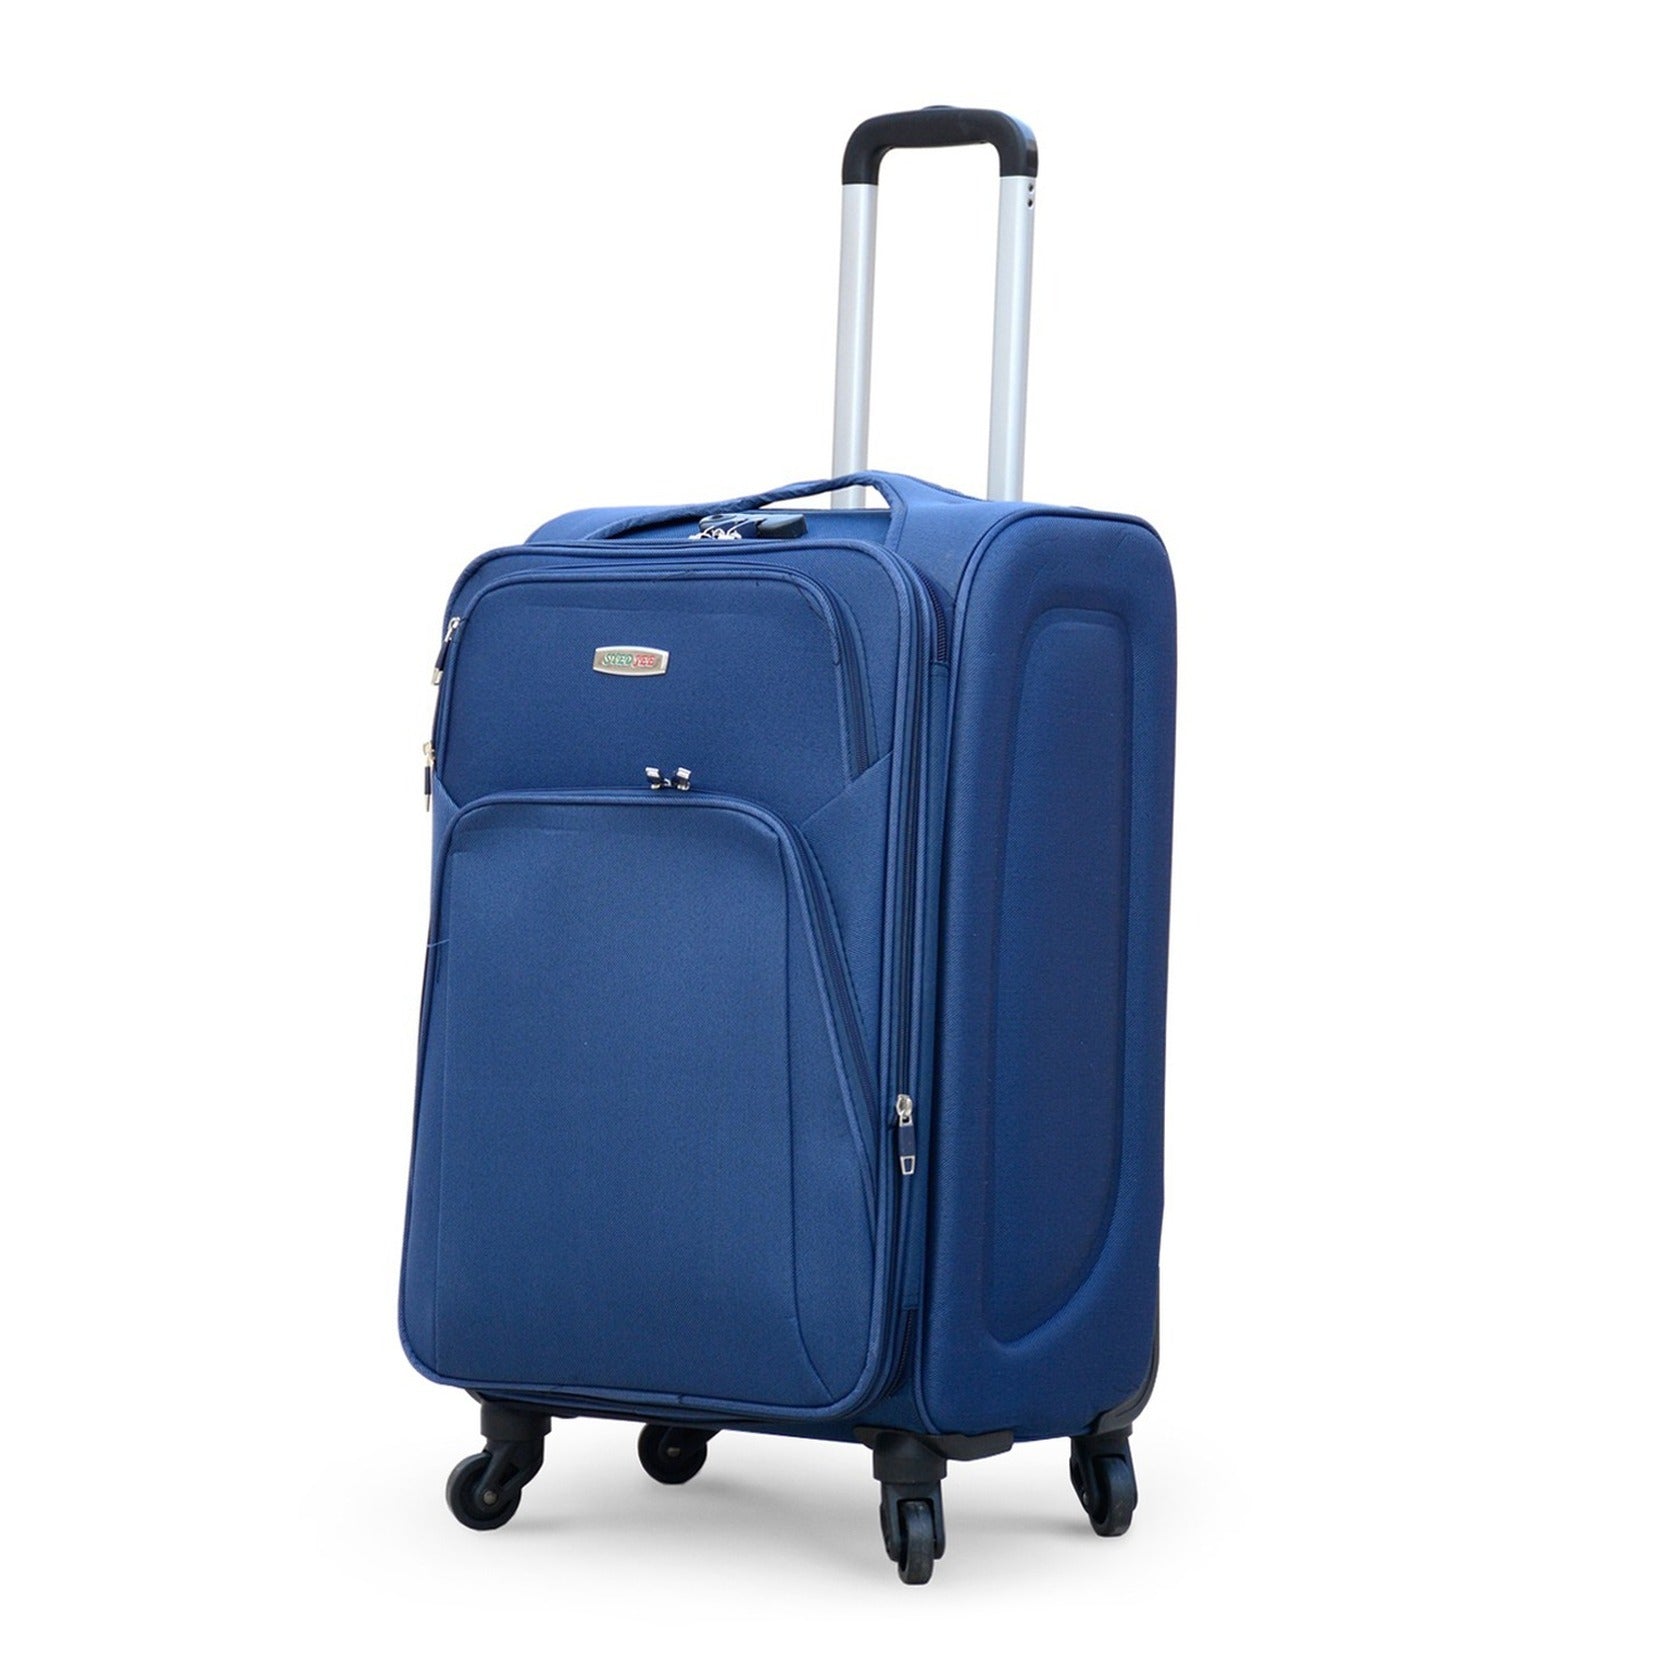 20" SJ JIAN 4 Wheel Lightweight Soft Material Carry On Luggage Bag